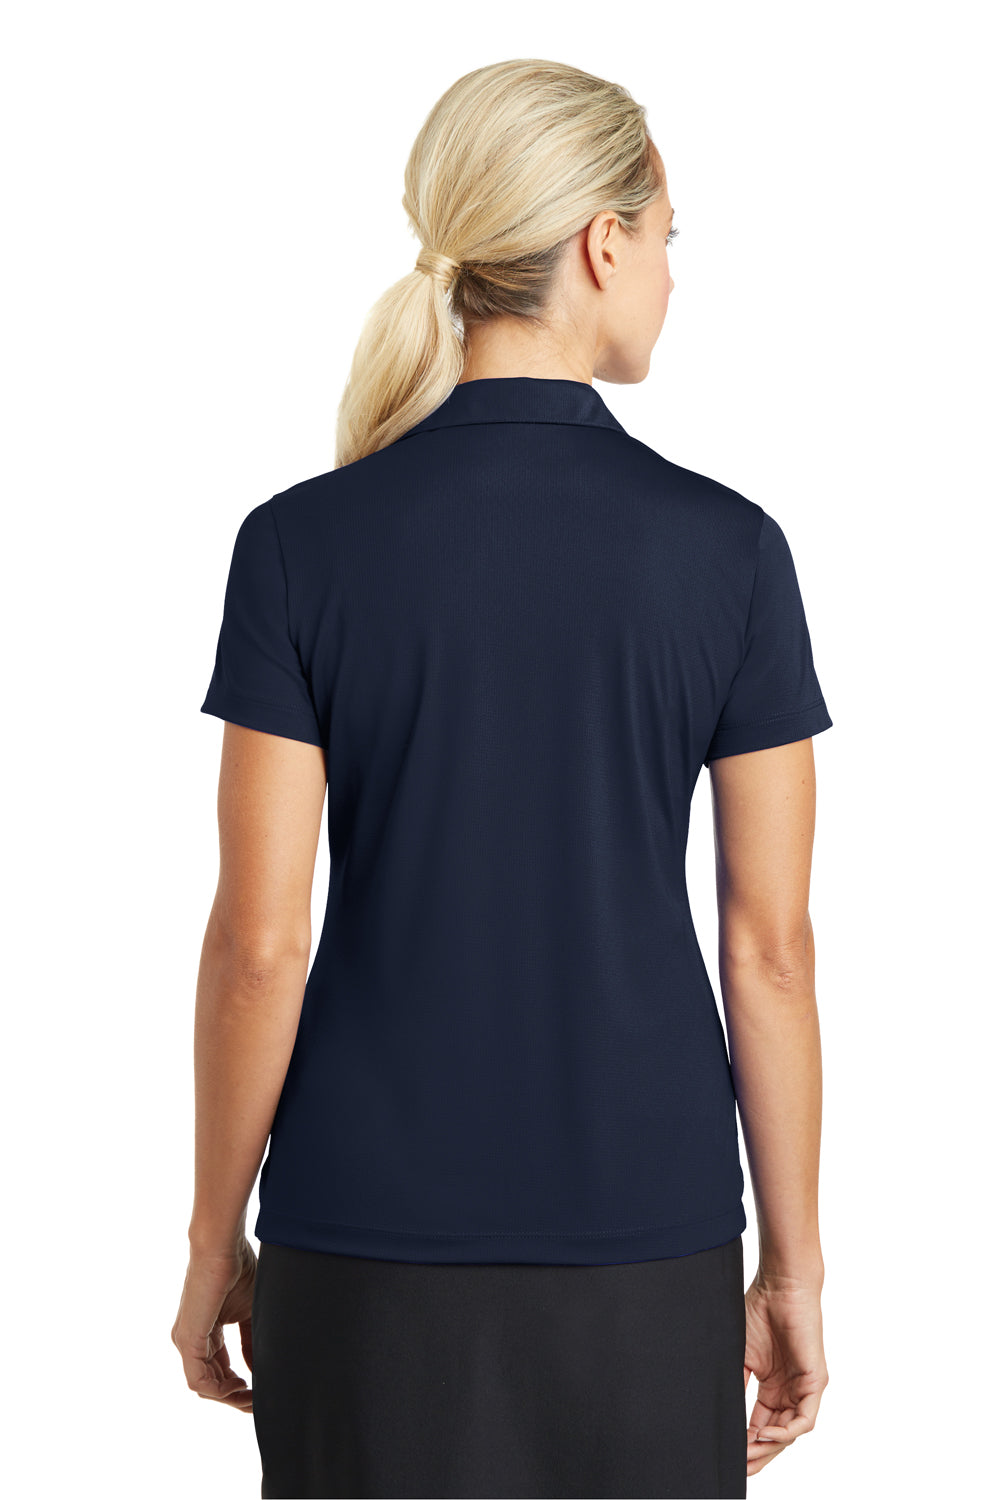 Nike 637165 Womens Dri-Fit Moisture Wicking Short Sleeve Polo Shirt Marine Blue Model Back